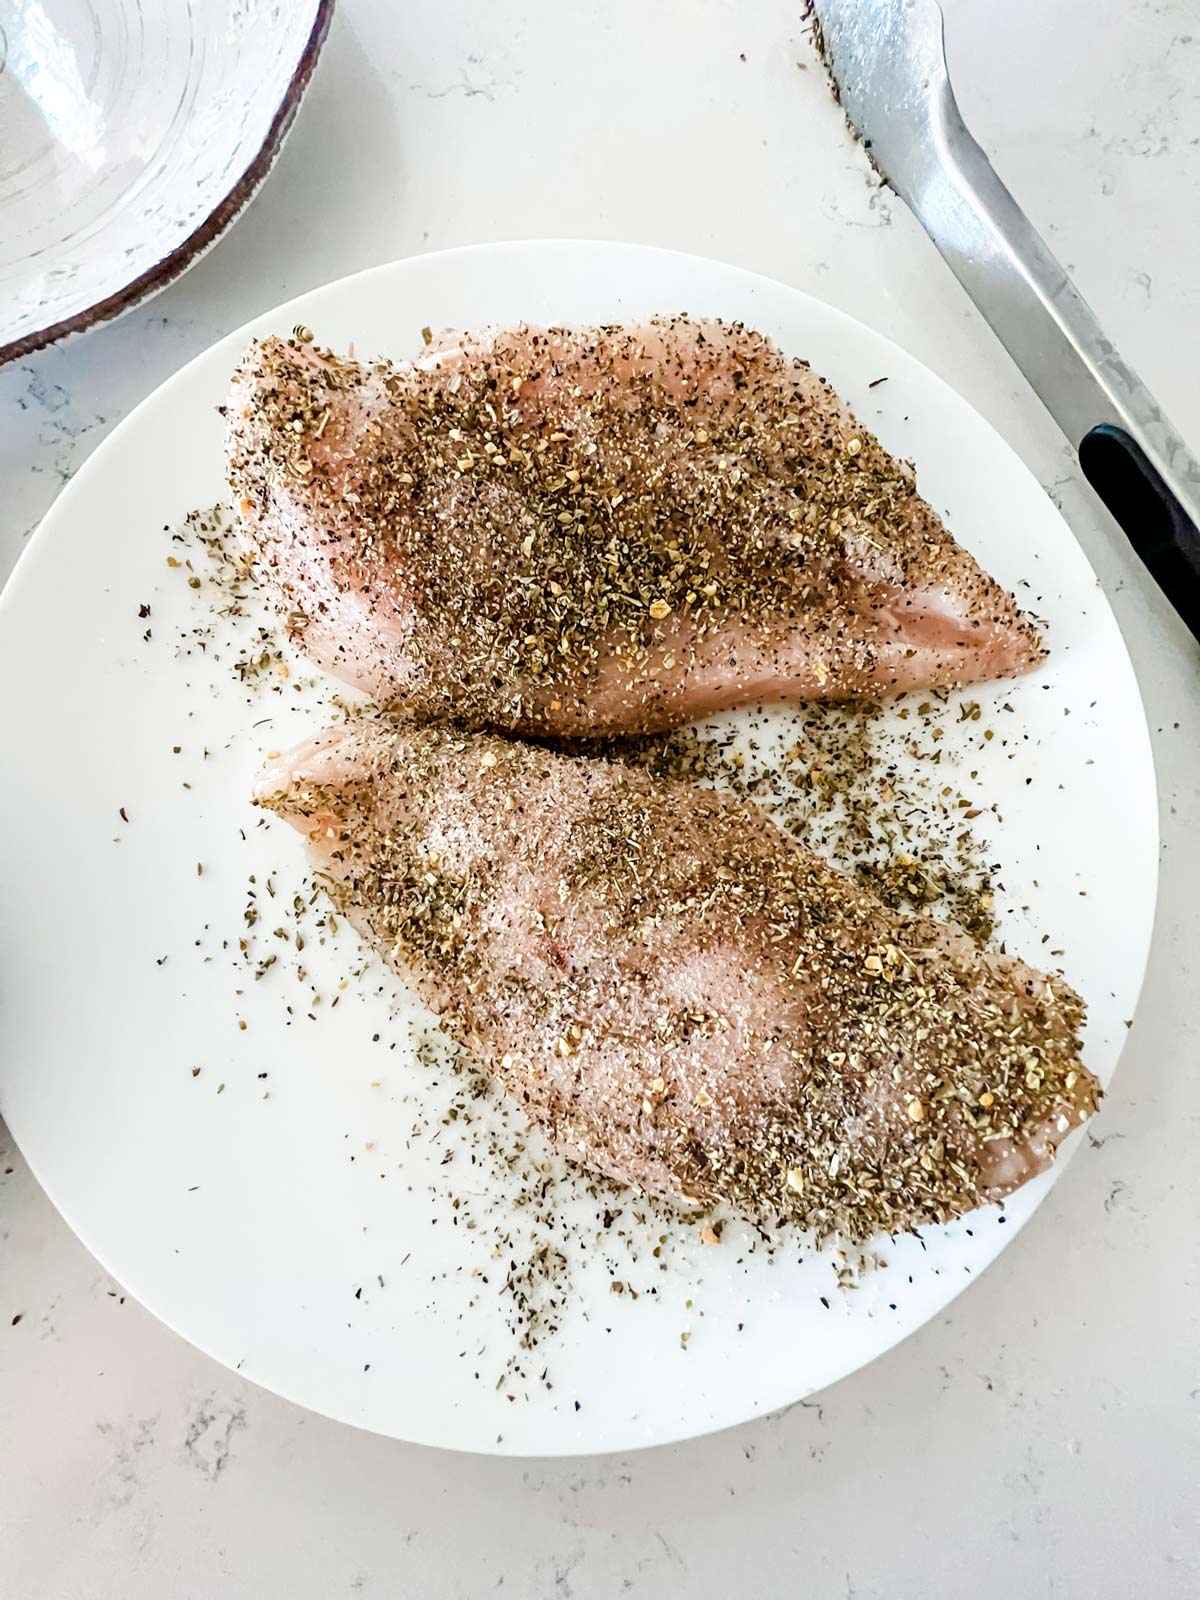 Raw seasoned chicken on a plate.